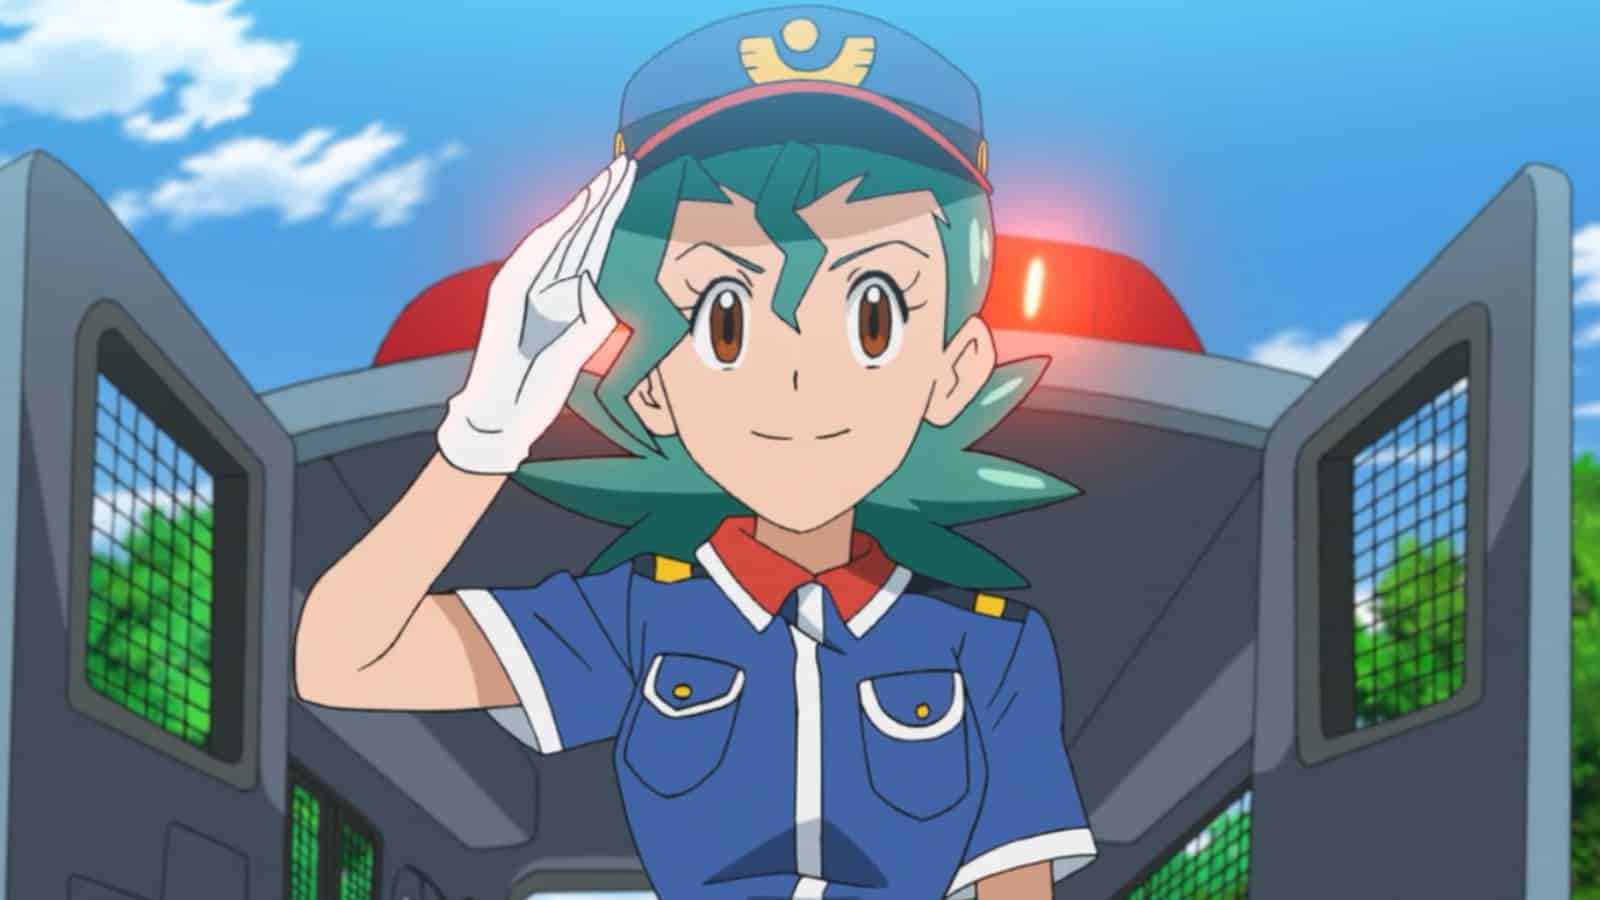 Officer Jenny in Pokemon anime arresting